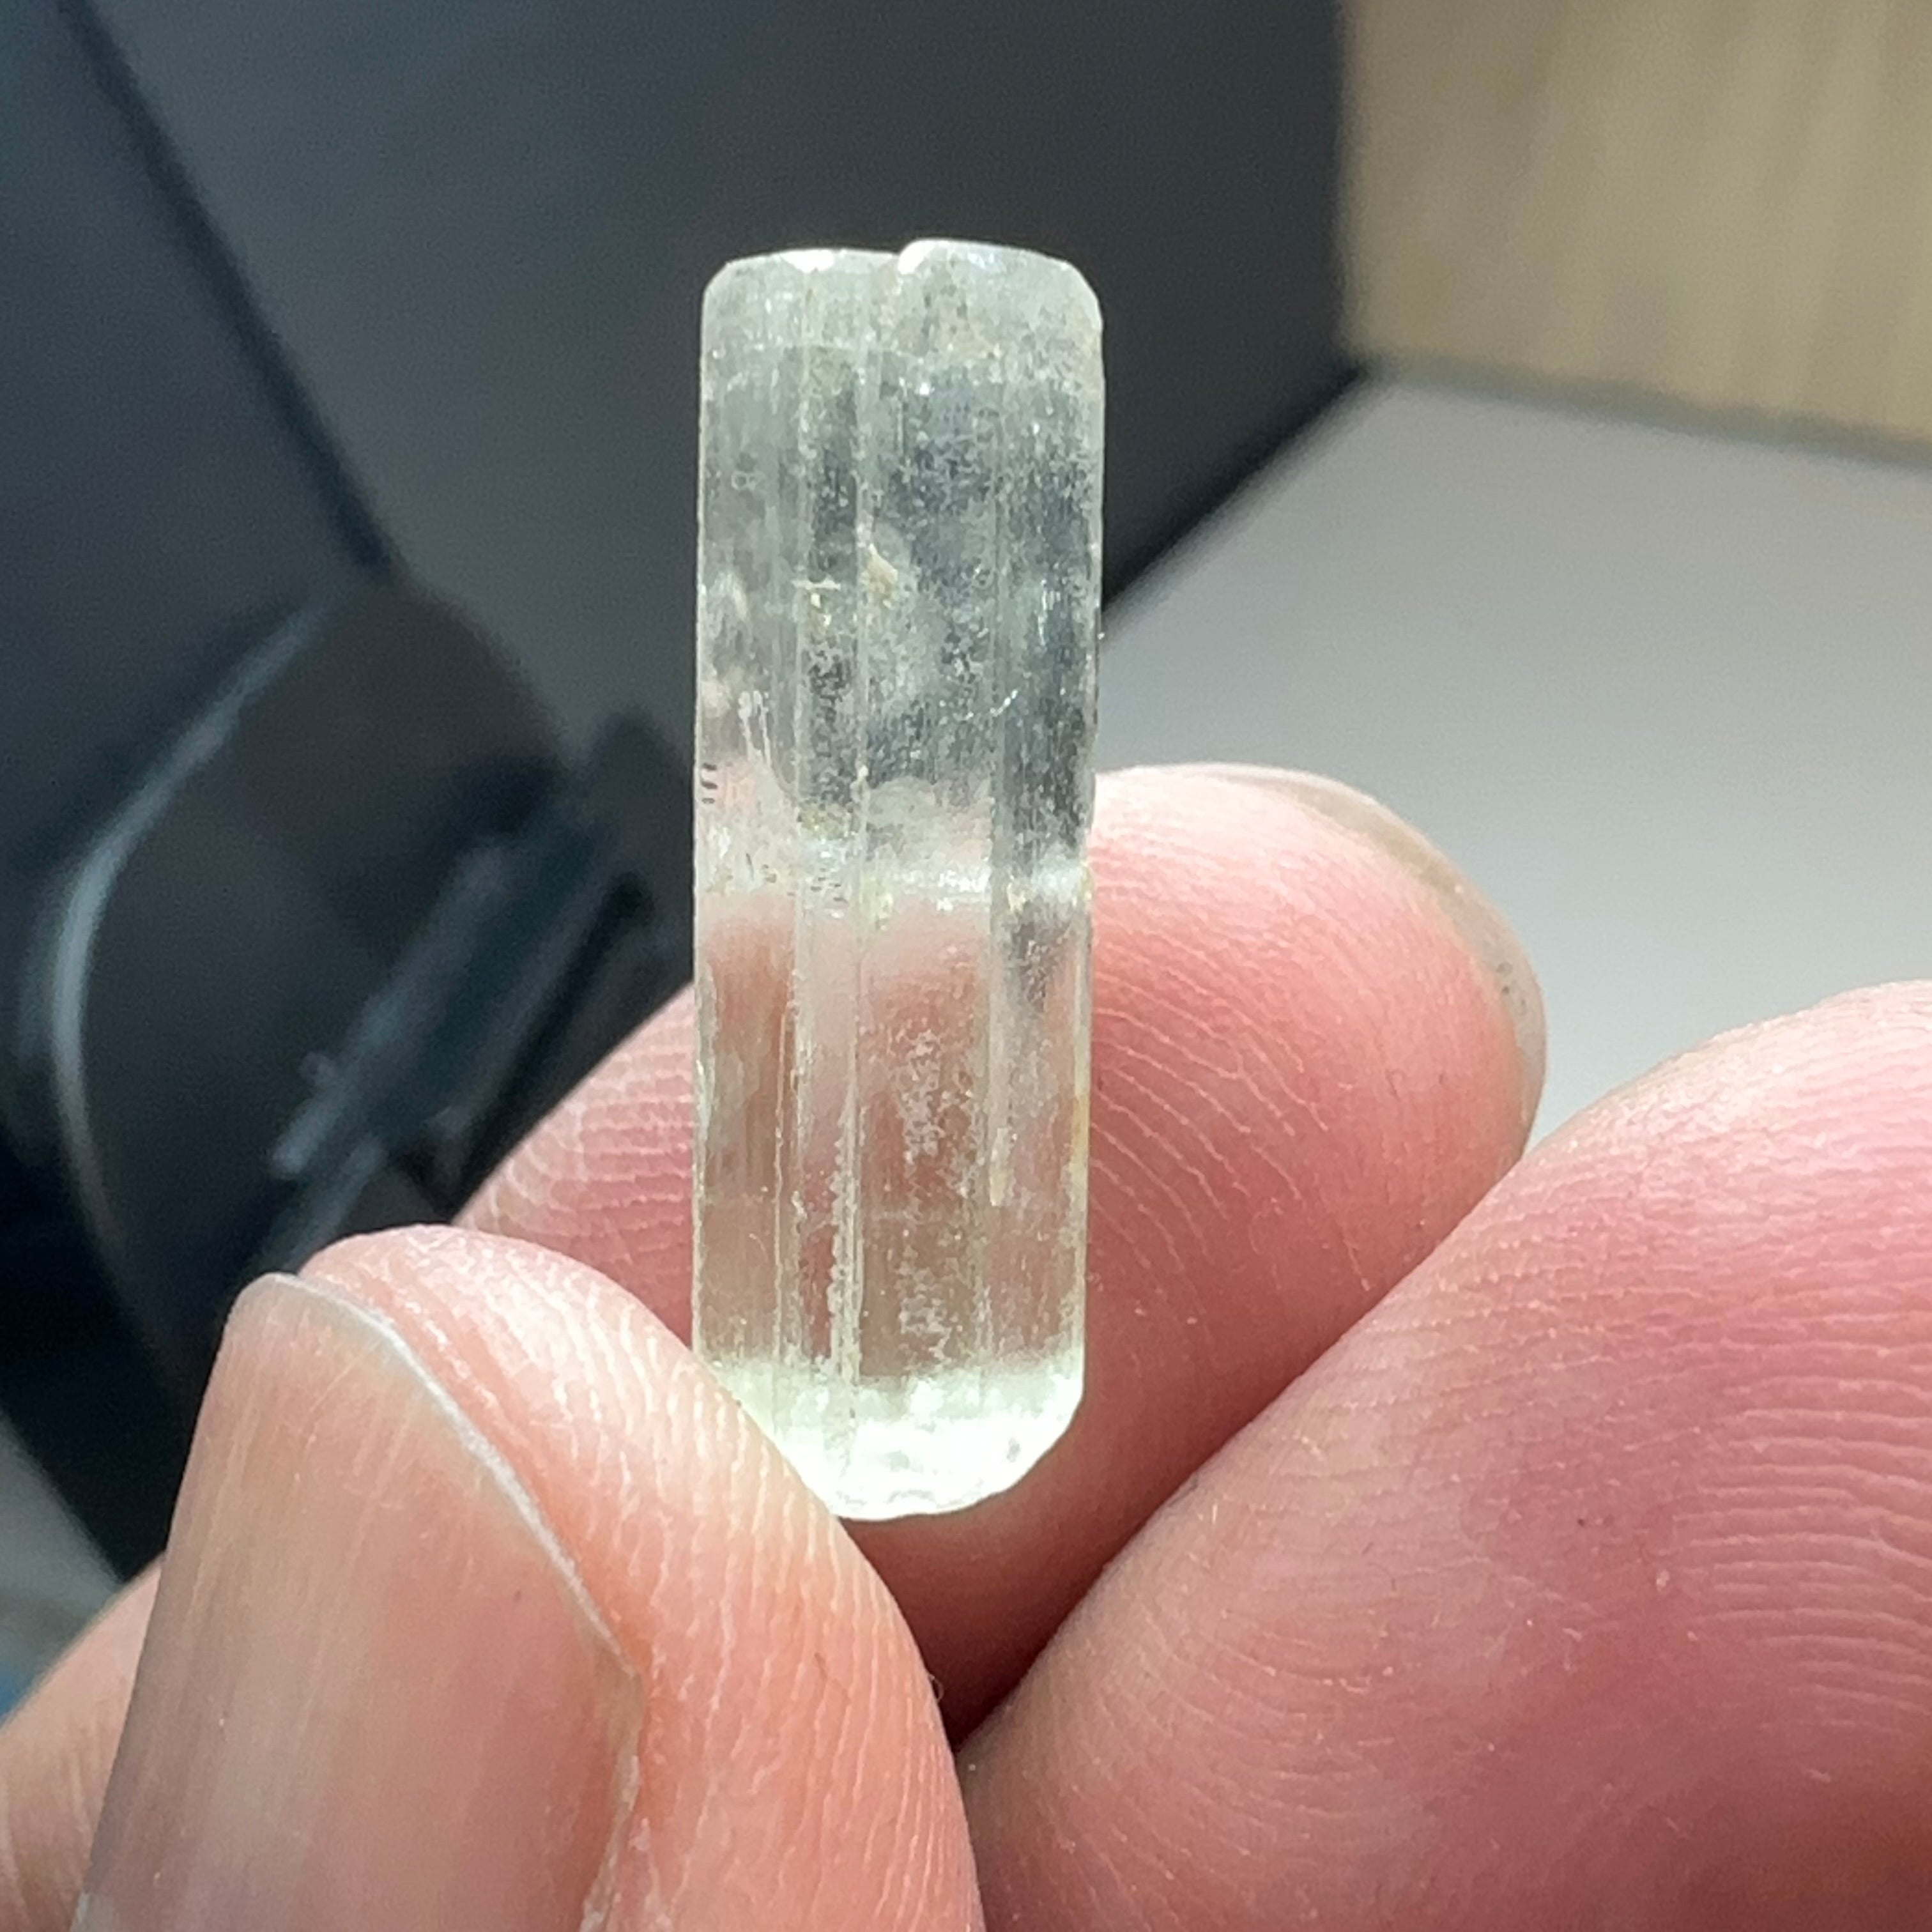 9.43ct Aquamarine crystal from Songea, Tanzania, Unheated Untreated, included, use as specimen